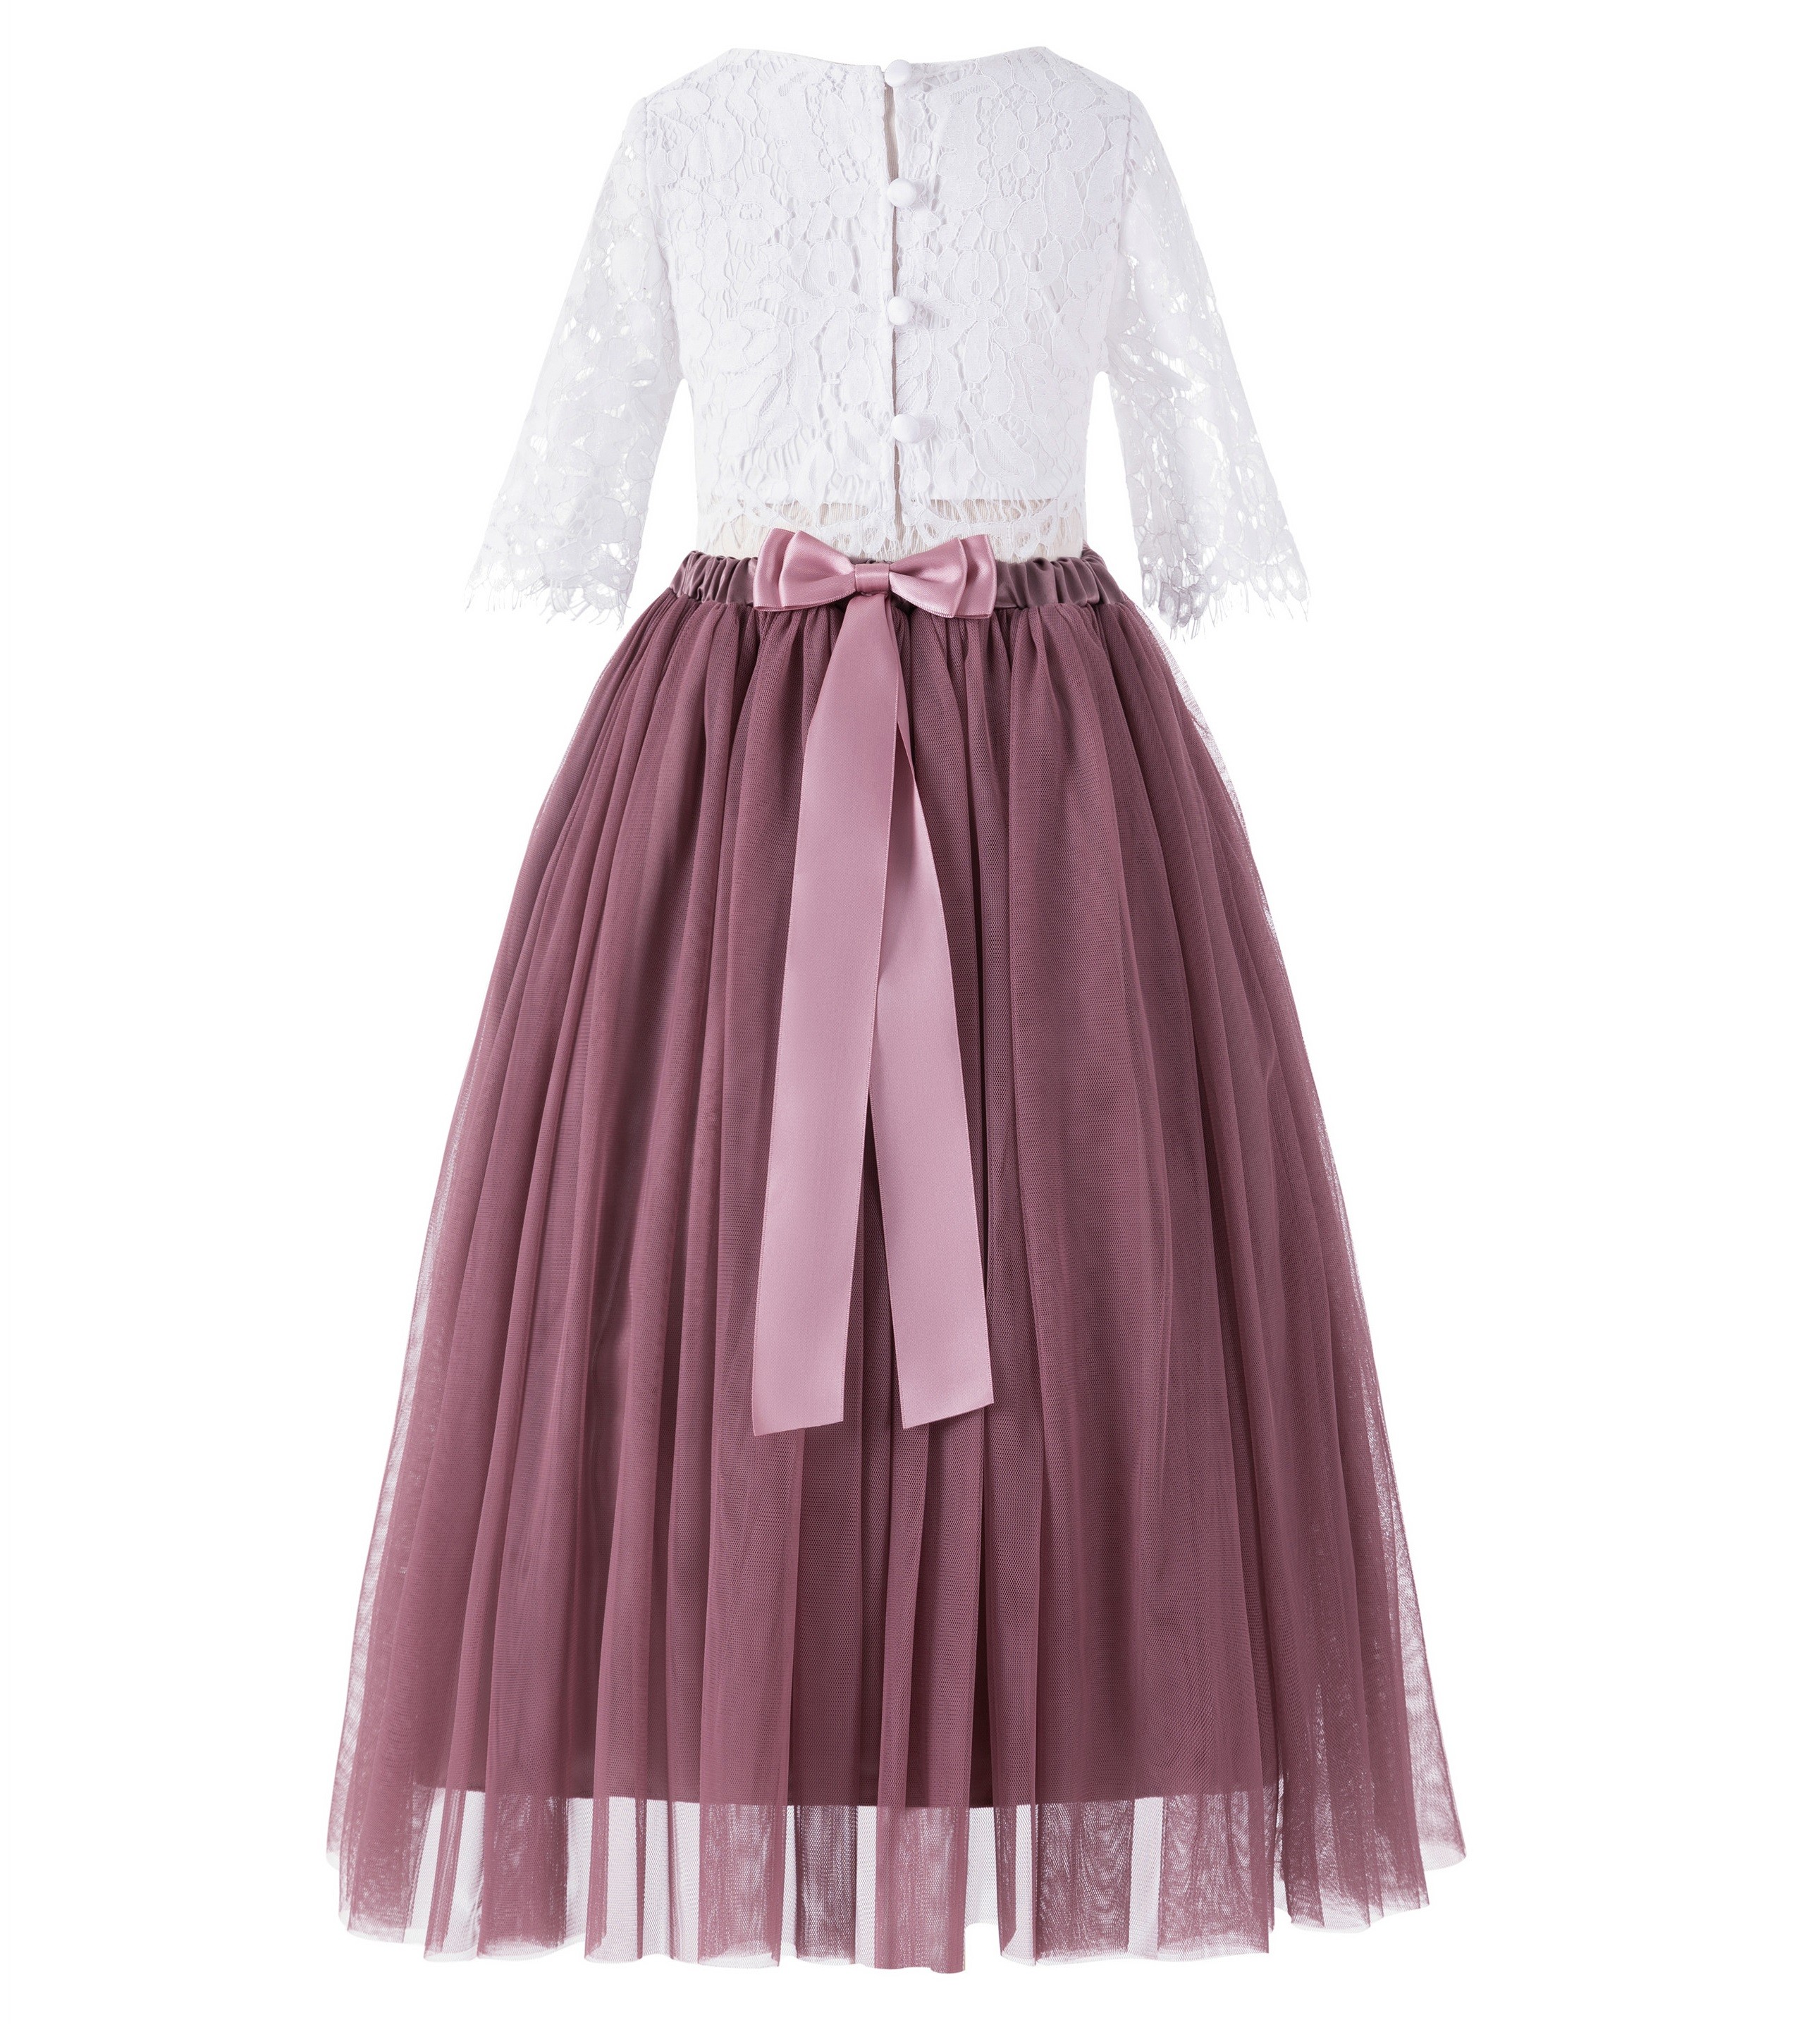 Mauve Eyelash Lace Flower Girl Dress A-Line Tulle Dress LG5